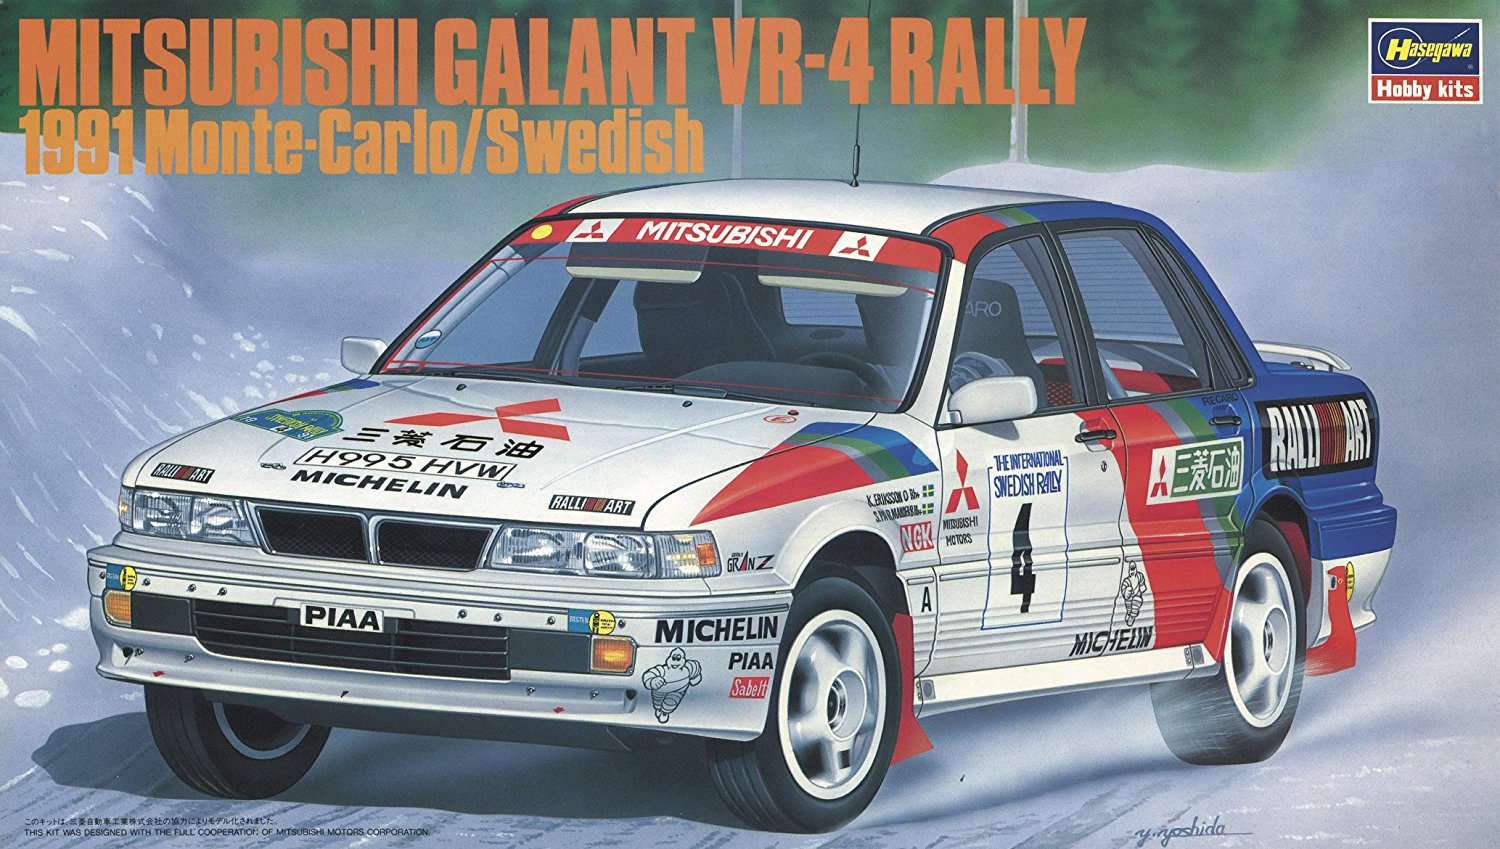 Mitsubishi Galant VR-4 "1991 Monte Carlo/Swedish Rally"